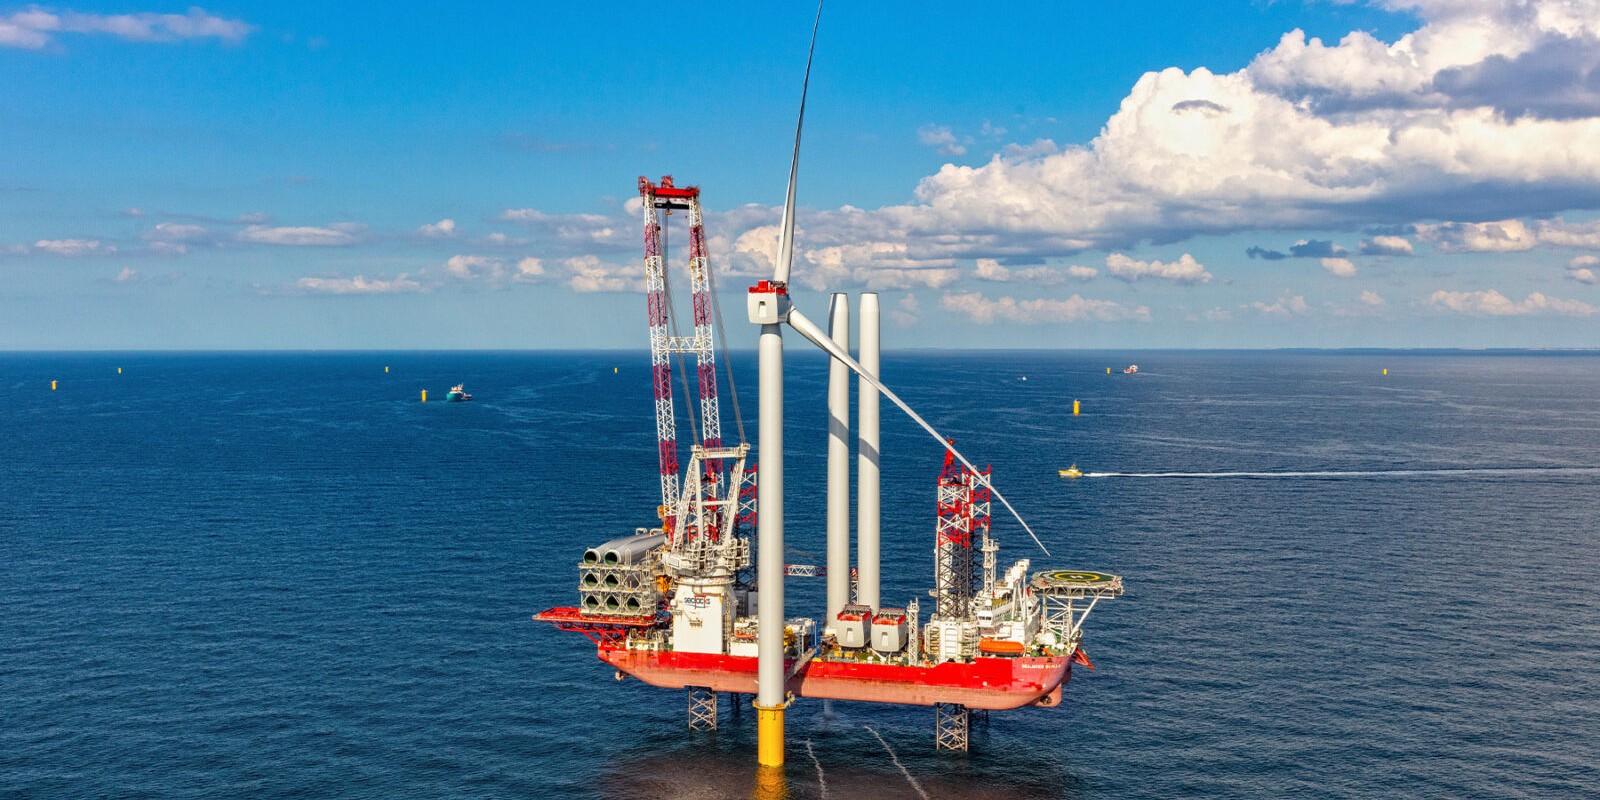 super-hybrid offshore wind farm